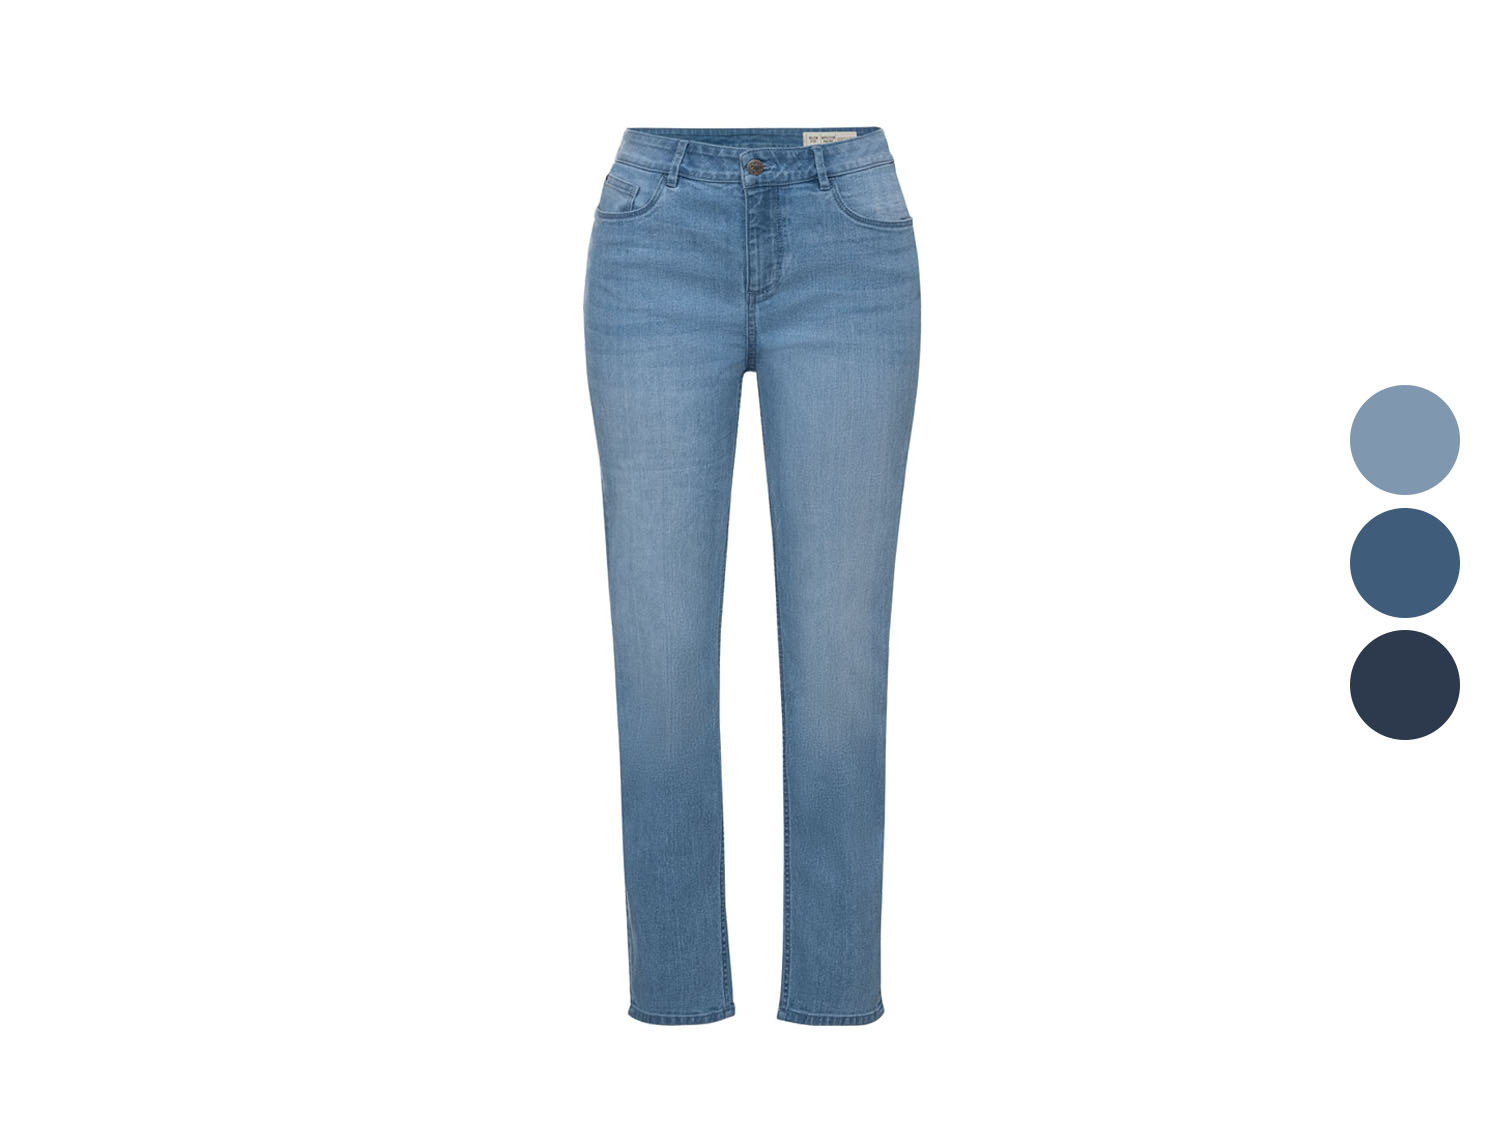 Klap middag Arthur esmara® Slim fit jeans van een katoenmix | Lidl.be